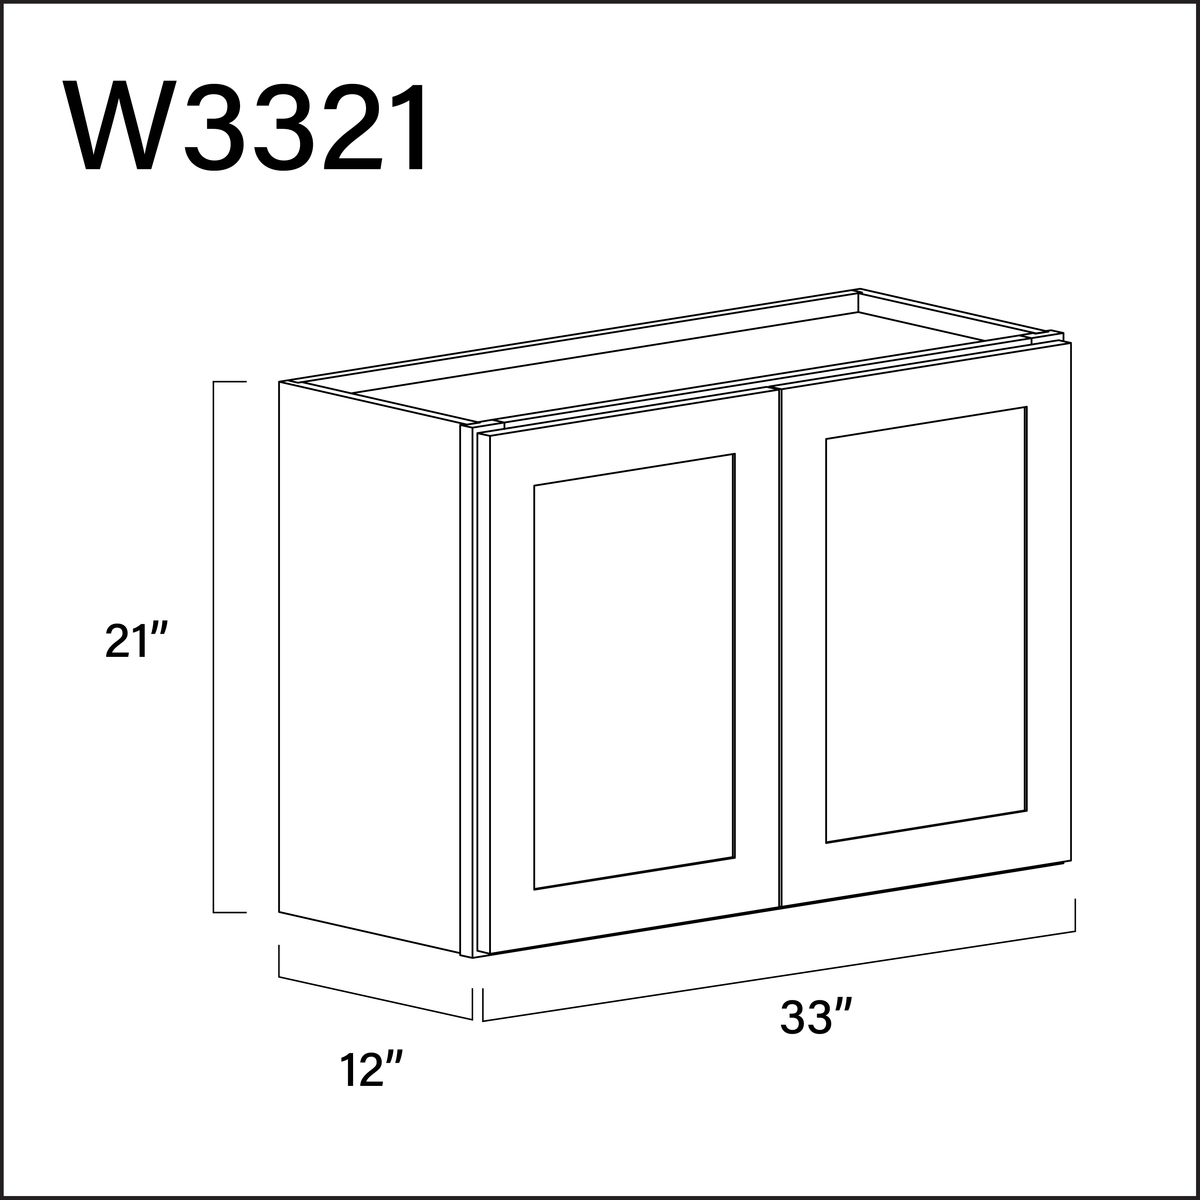 White Shaker Double Door Wall Cabinet - 33" W x 21" H x 12" D